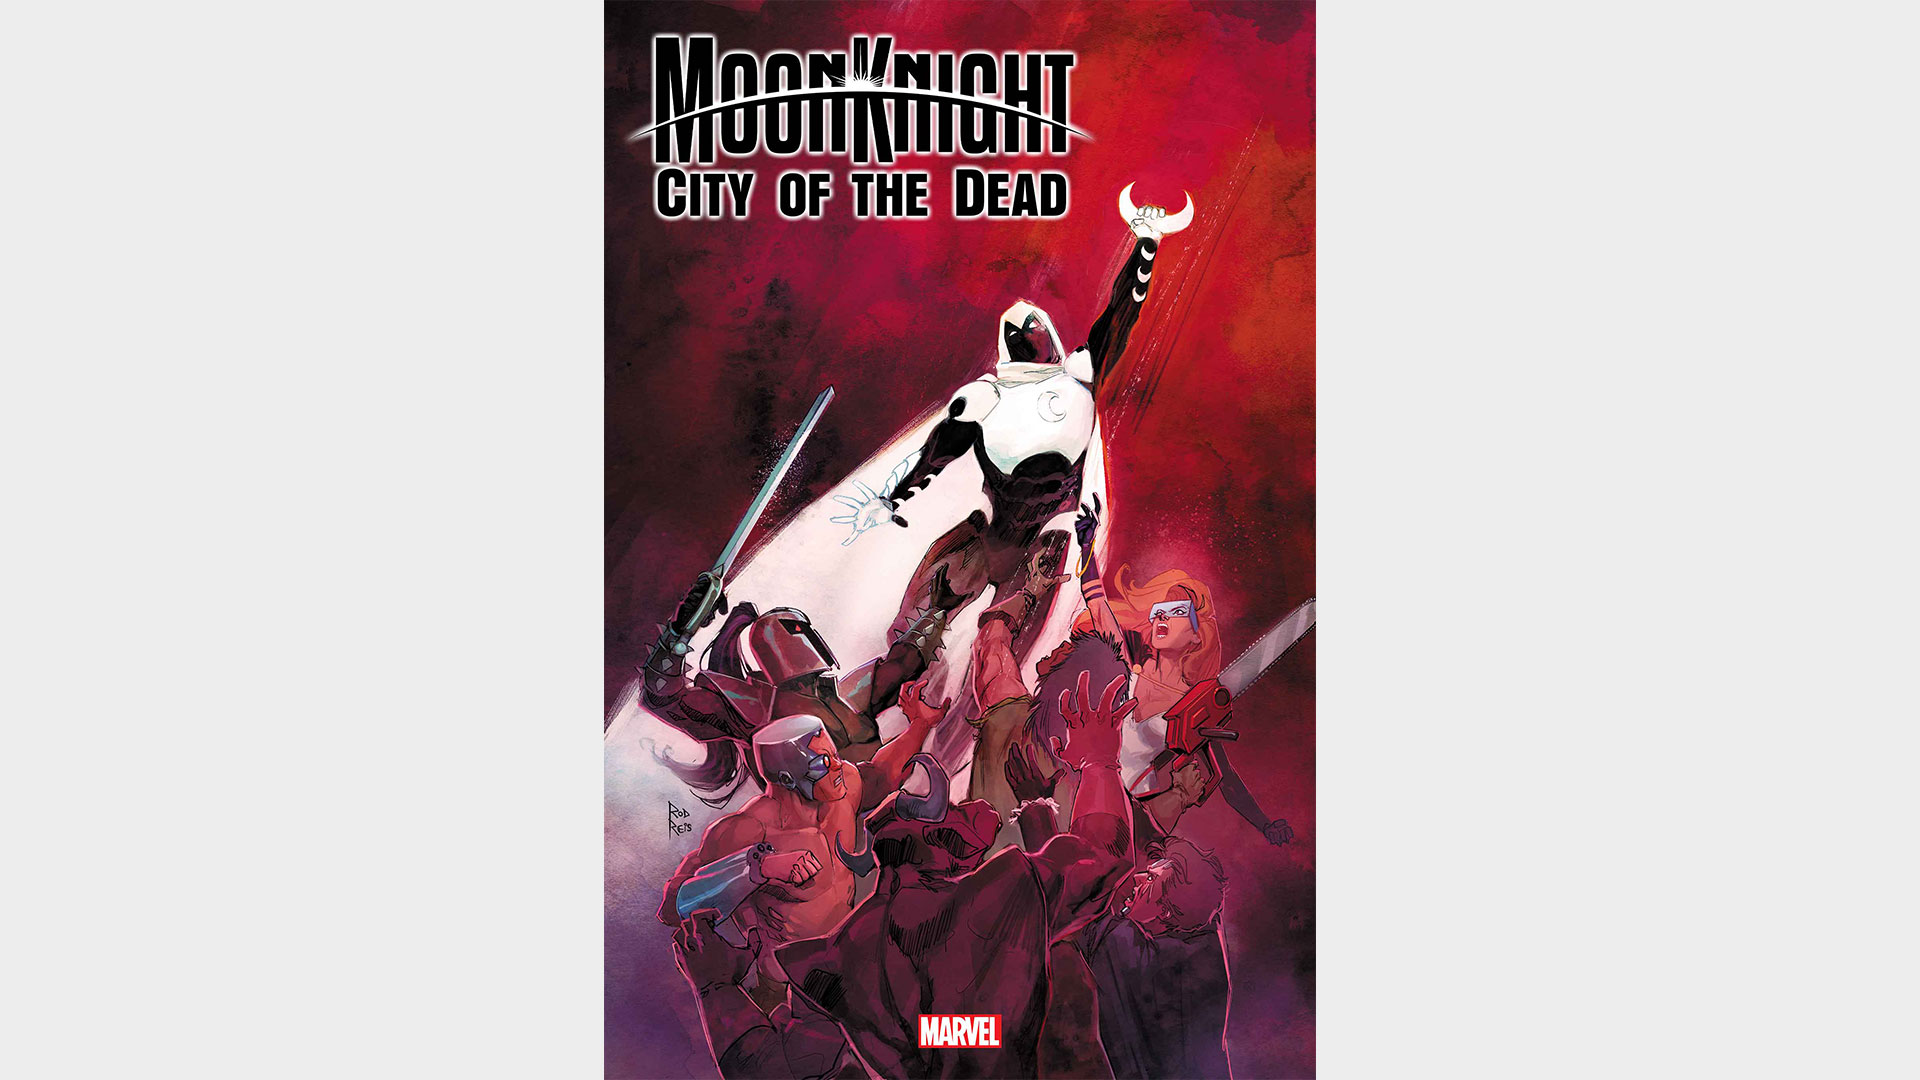 Moon Knight City of the Dead #3 kansi